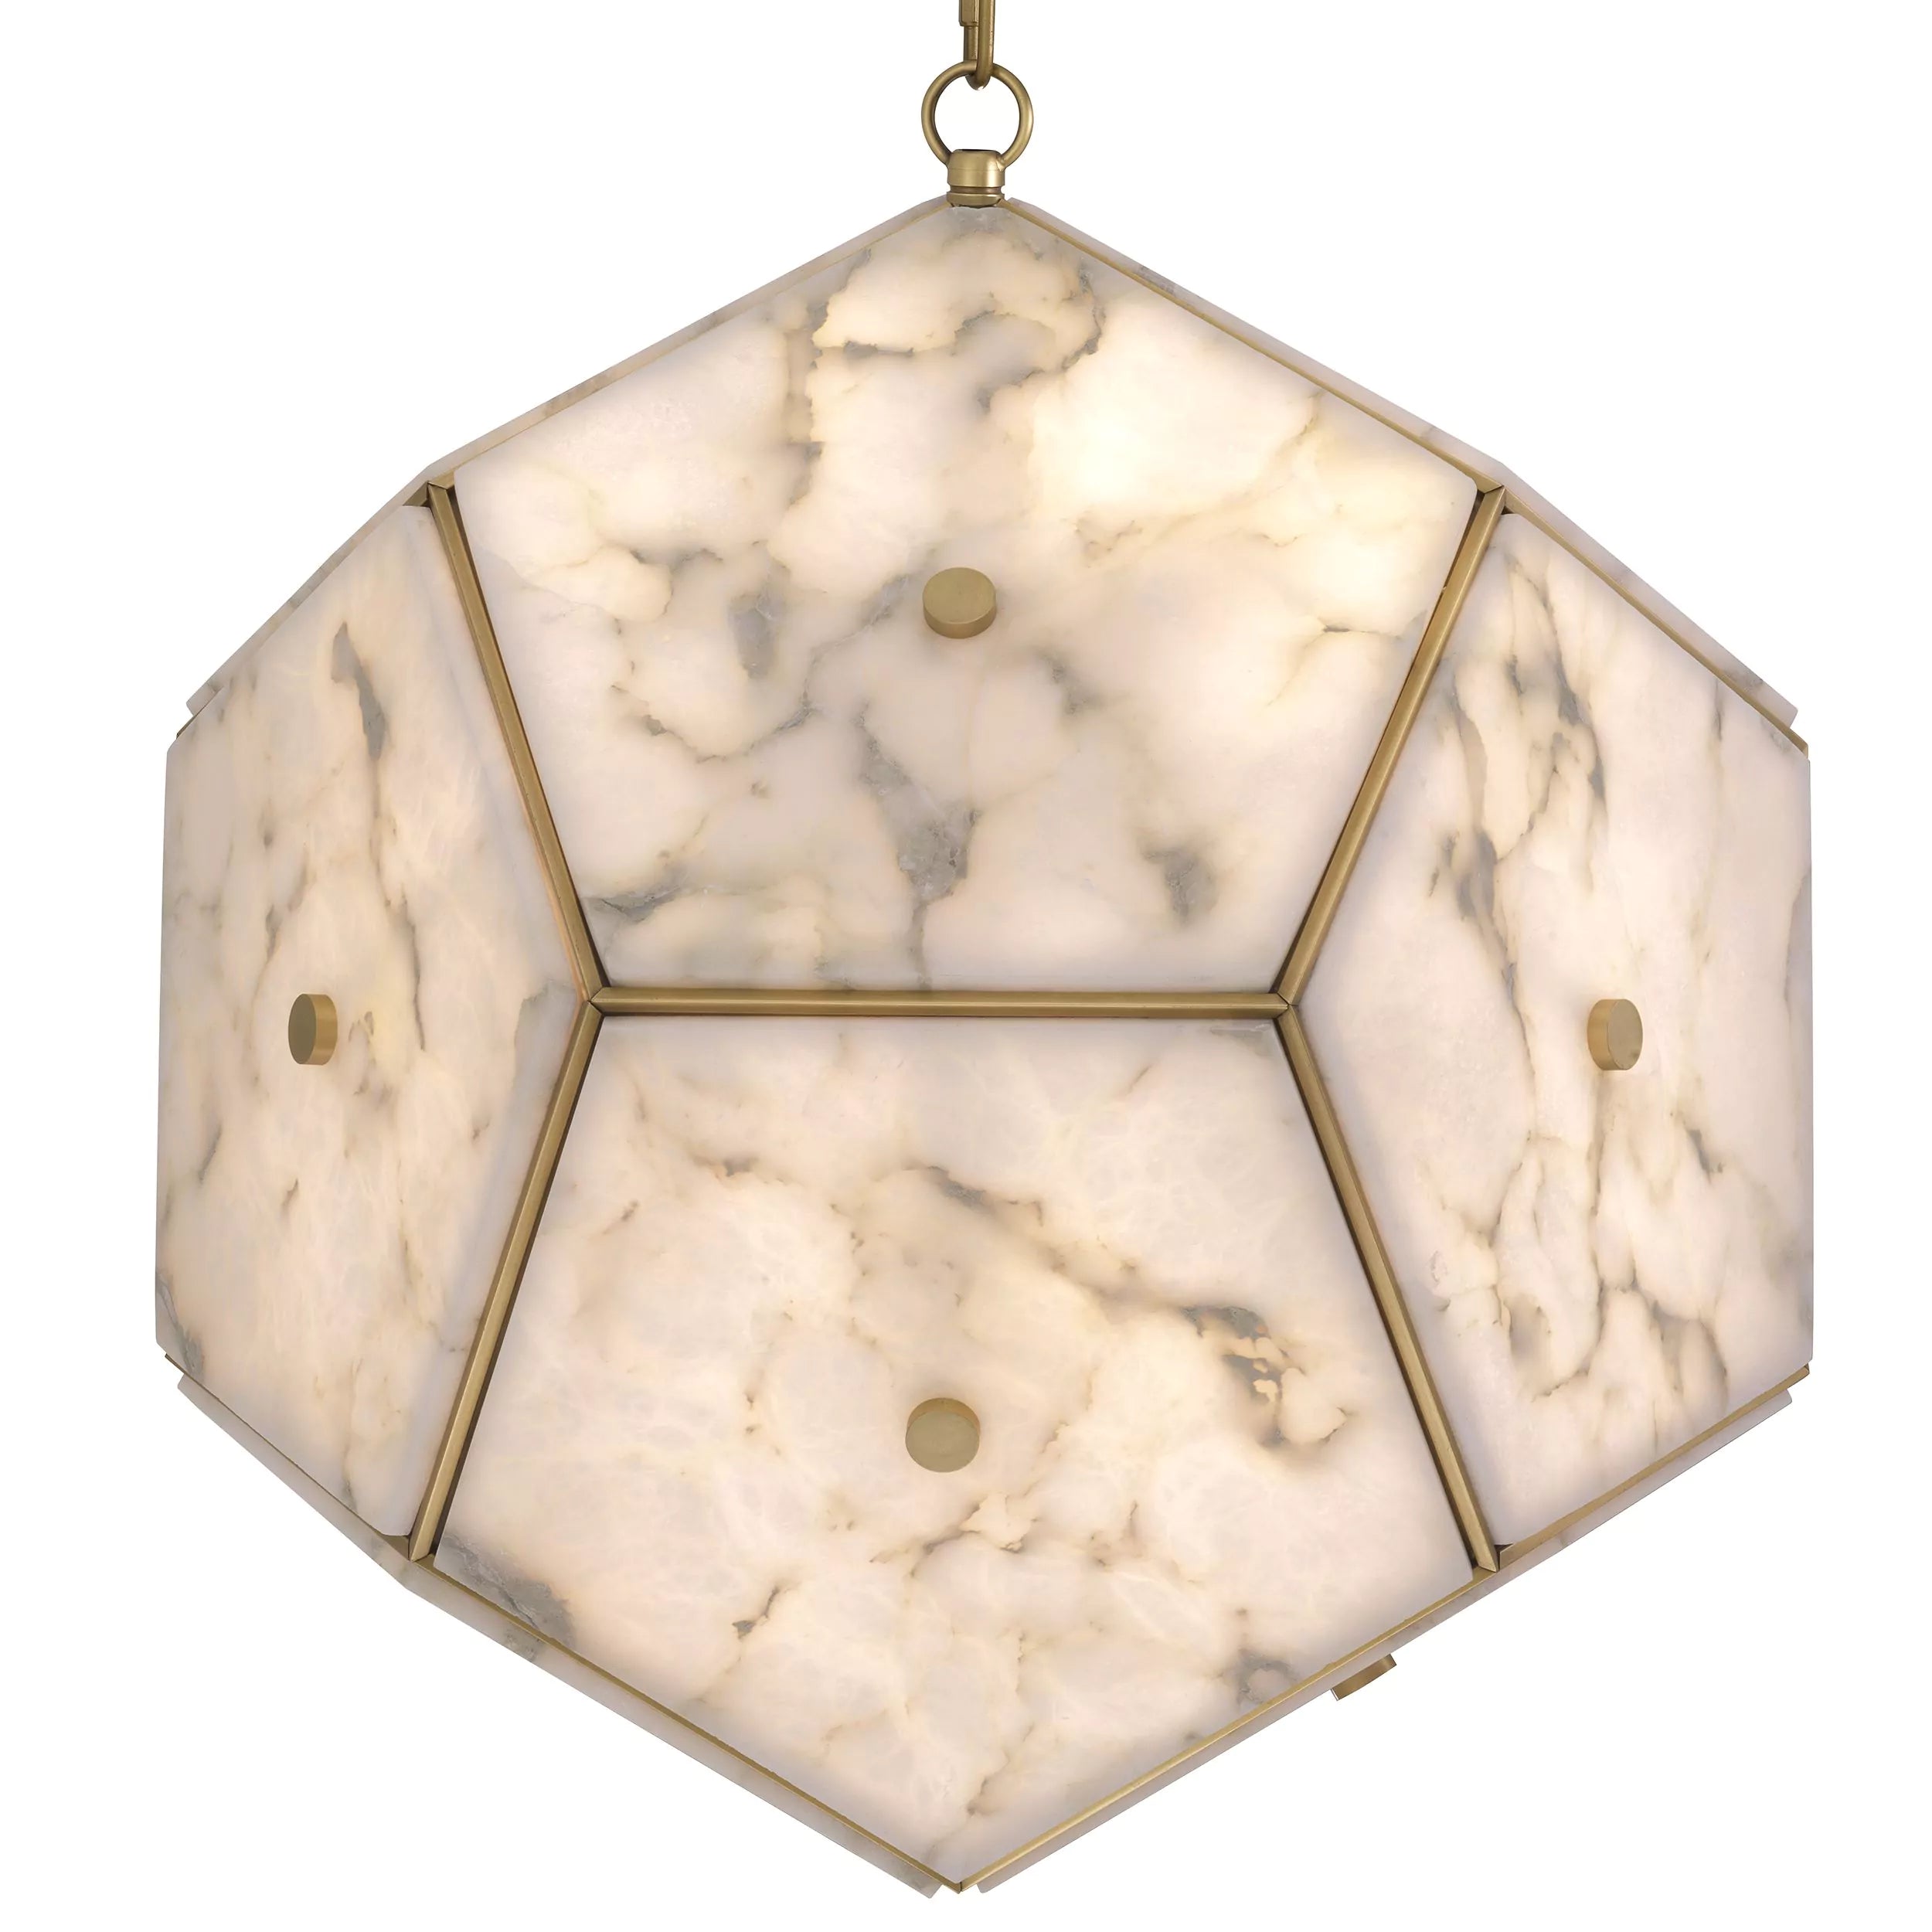 Gallo Lantern - Eichholtz - Luxury Lighting Boutique